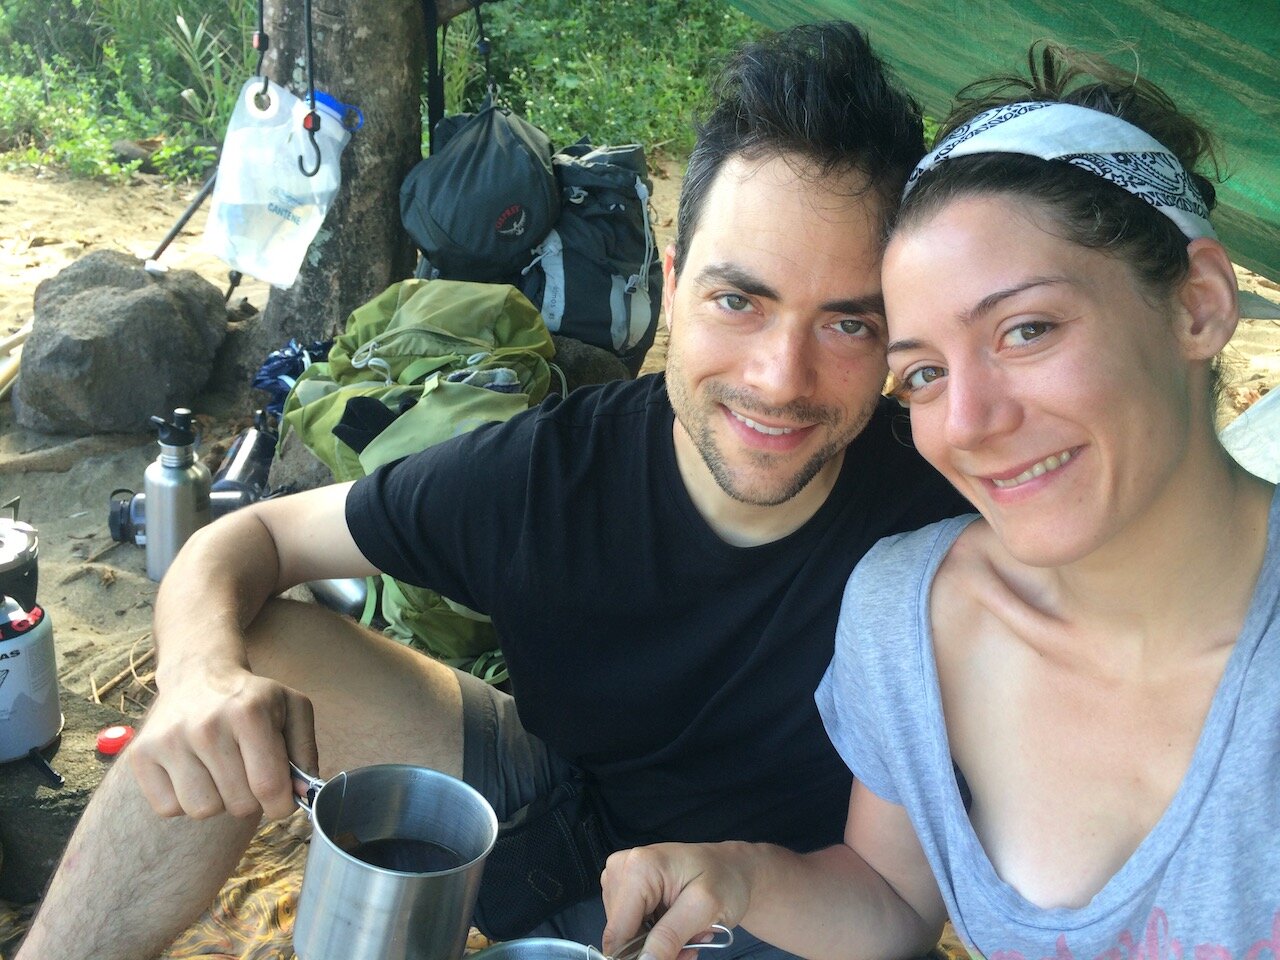    Enjoying tea together at our campsite. &lt;3    